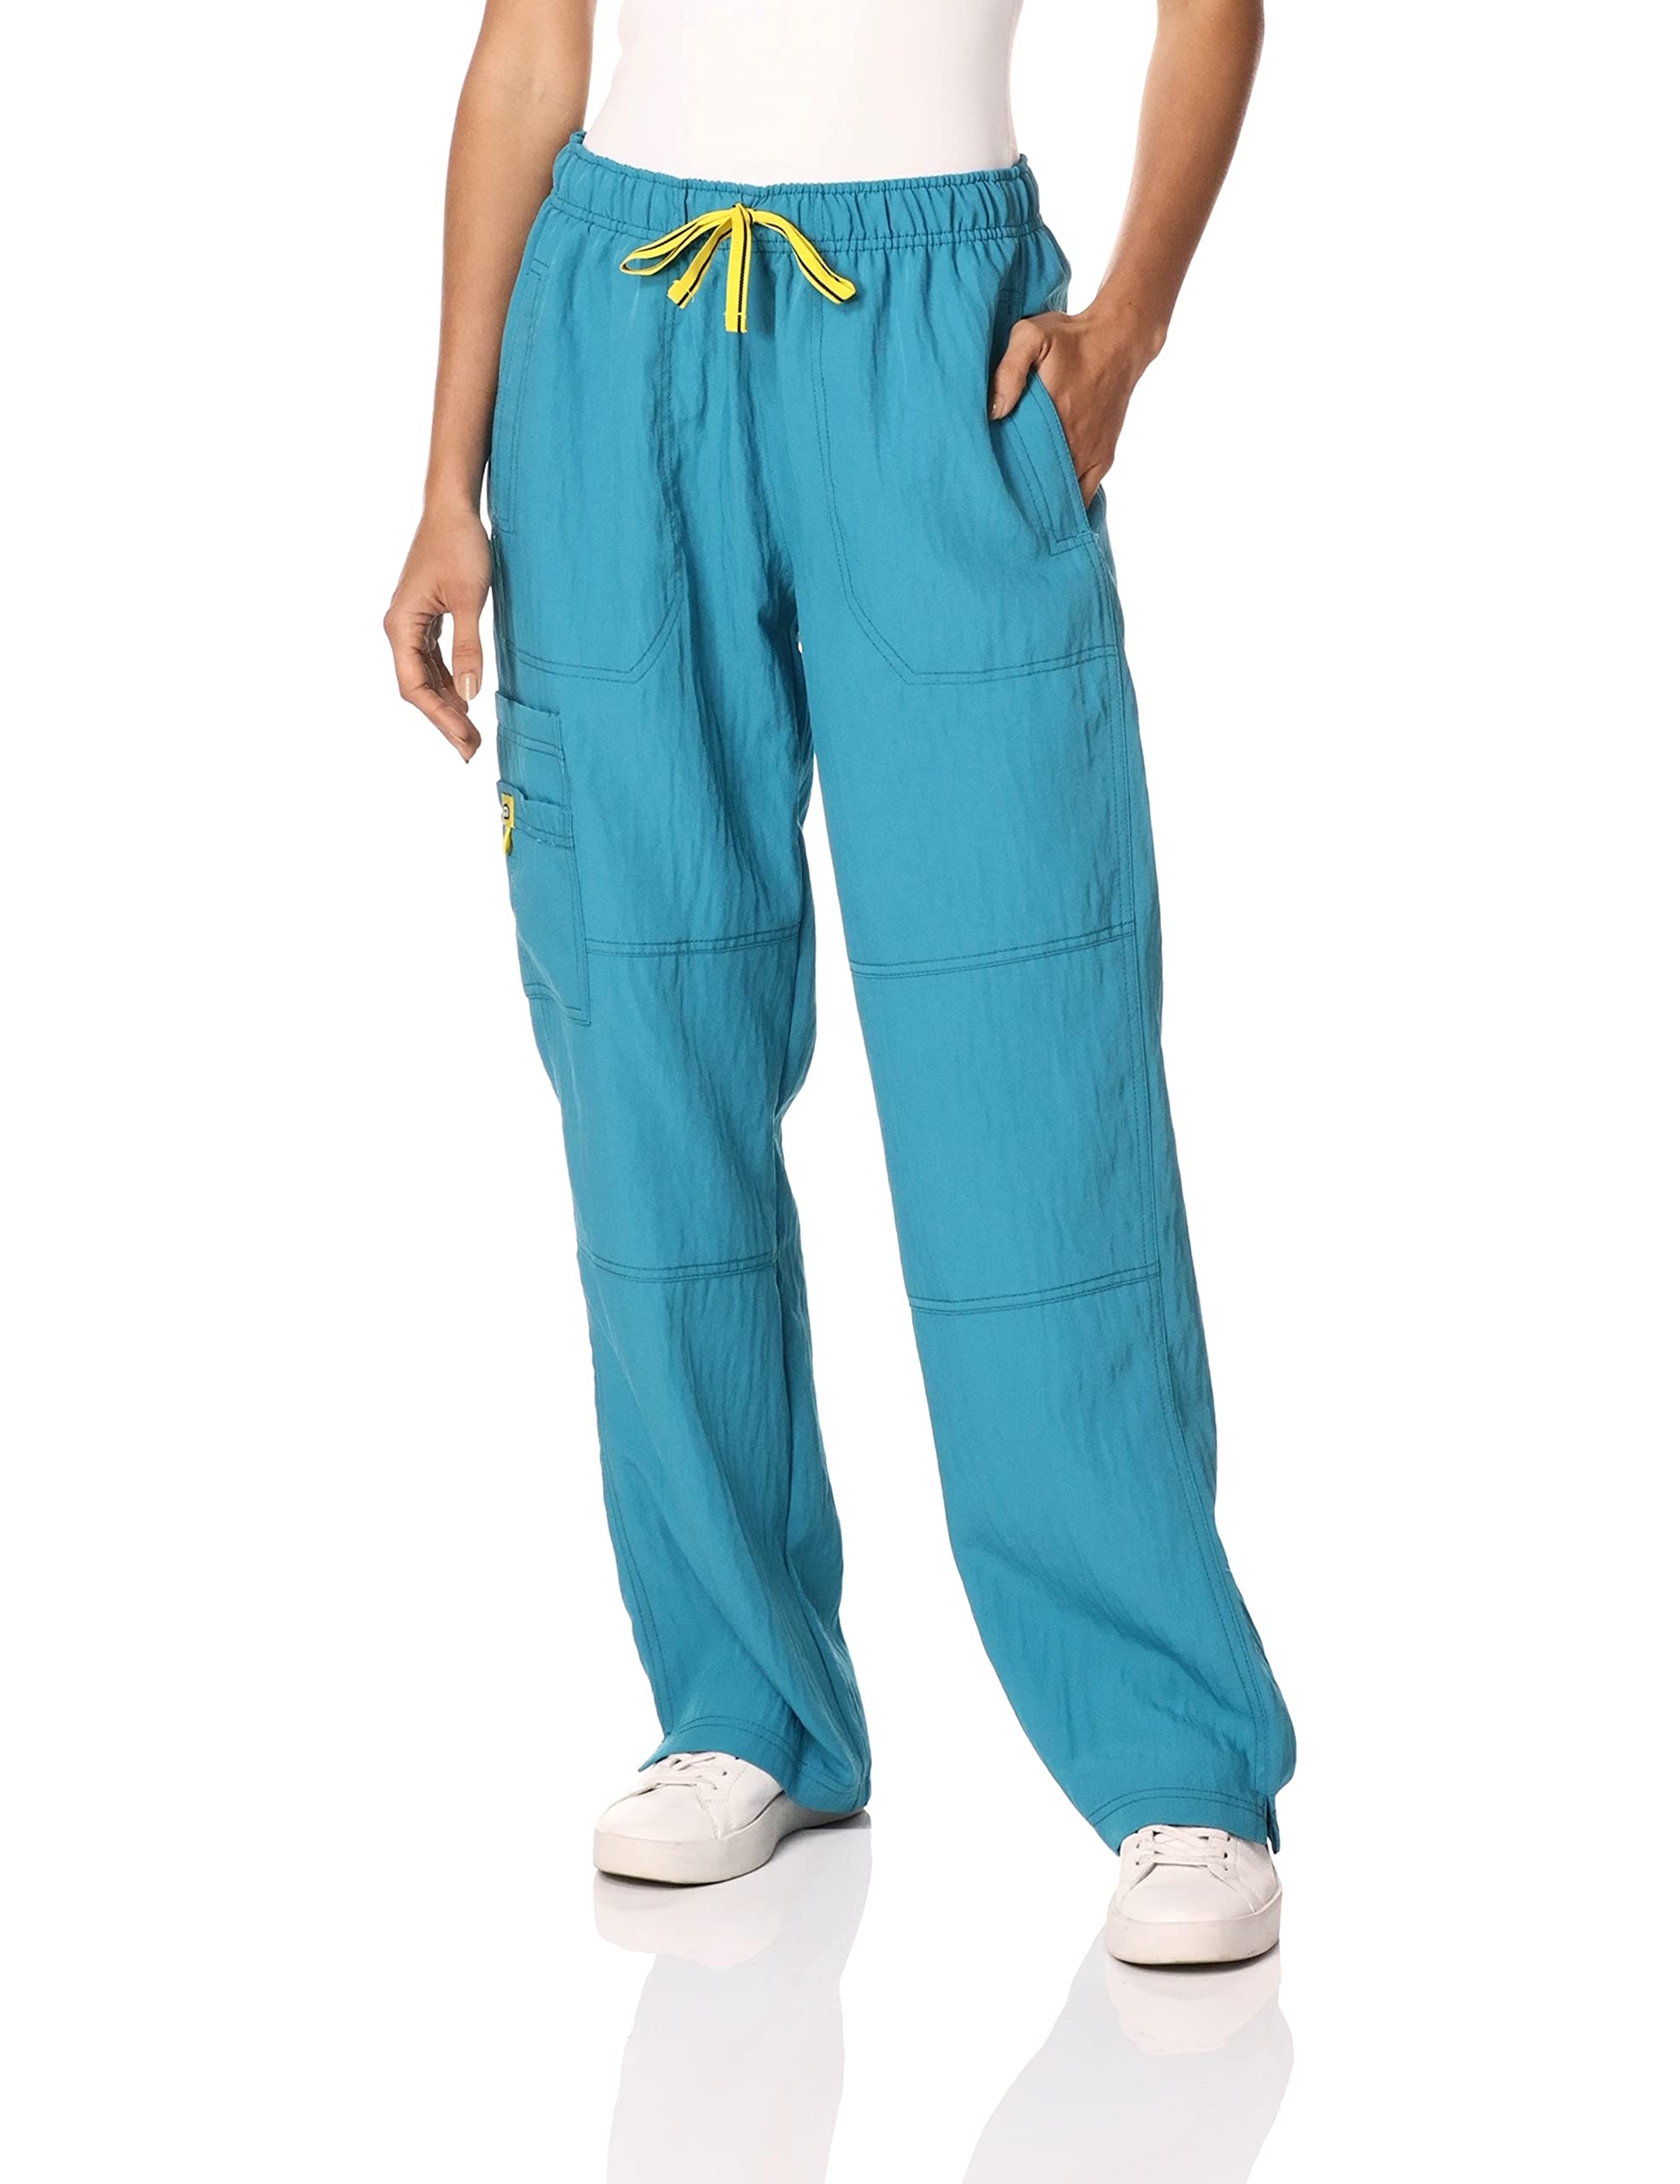 Wonderwink Womens Four Stretch Womens Cargo Medical Scrubs Pants, Blue, X-Large Petite Us